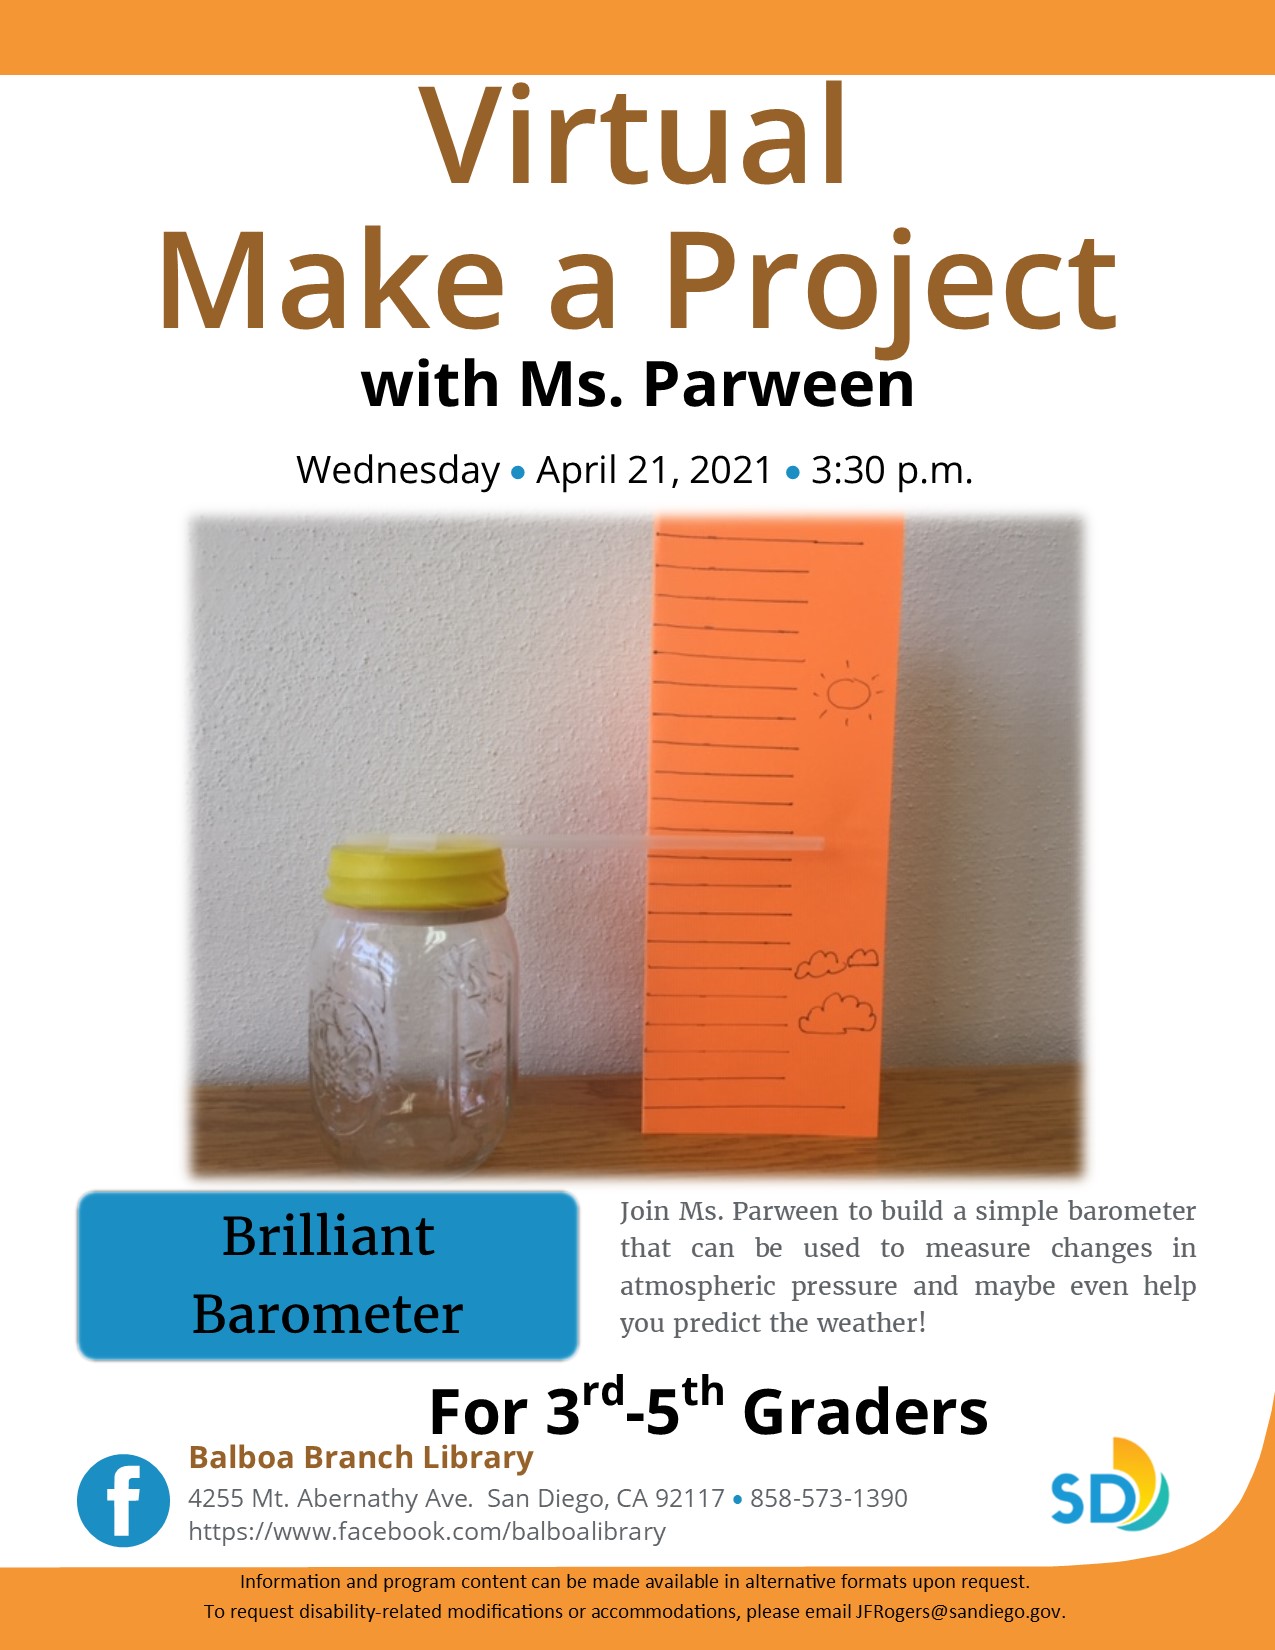 Make a Project Program Flyer